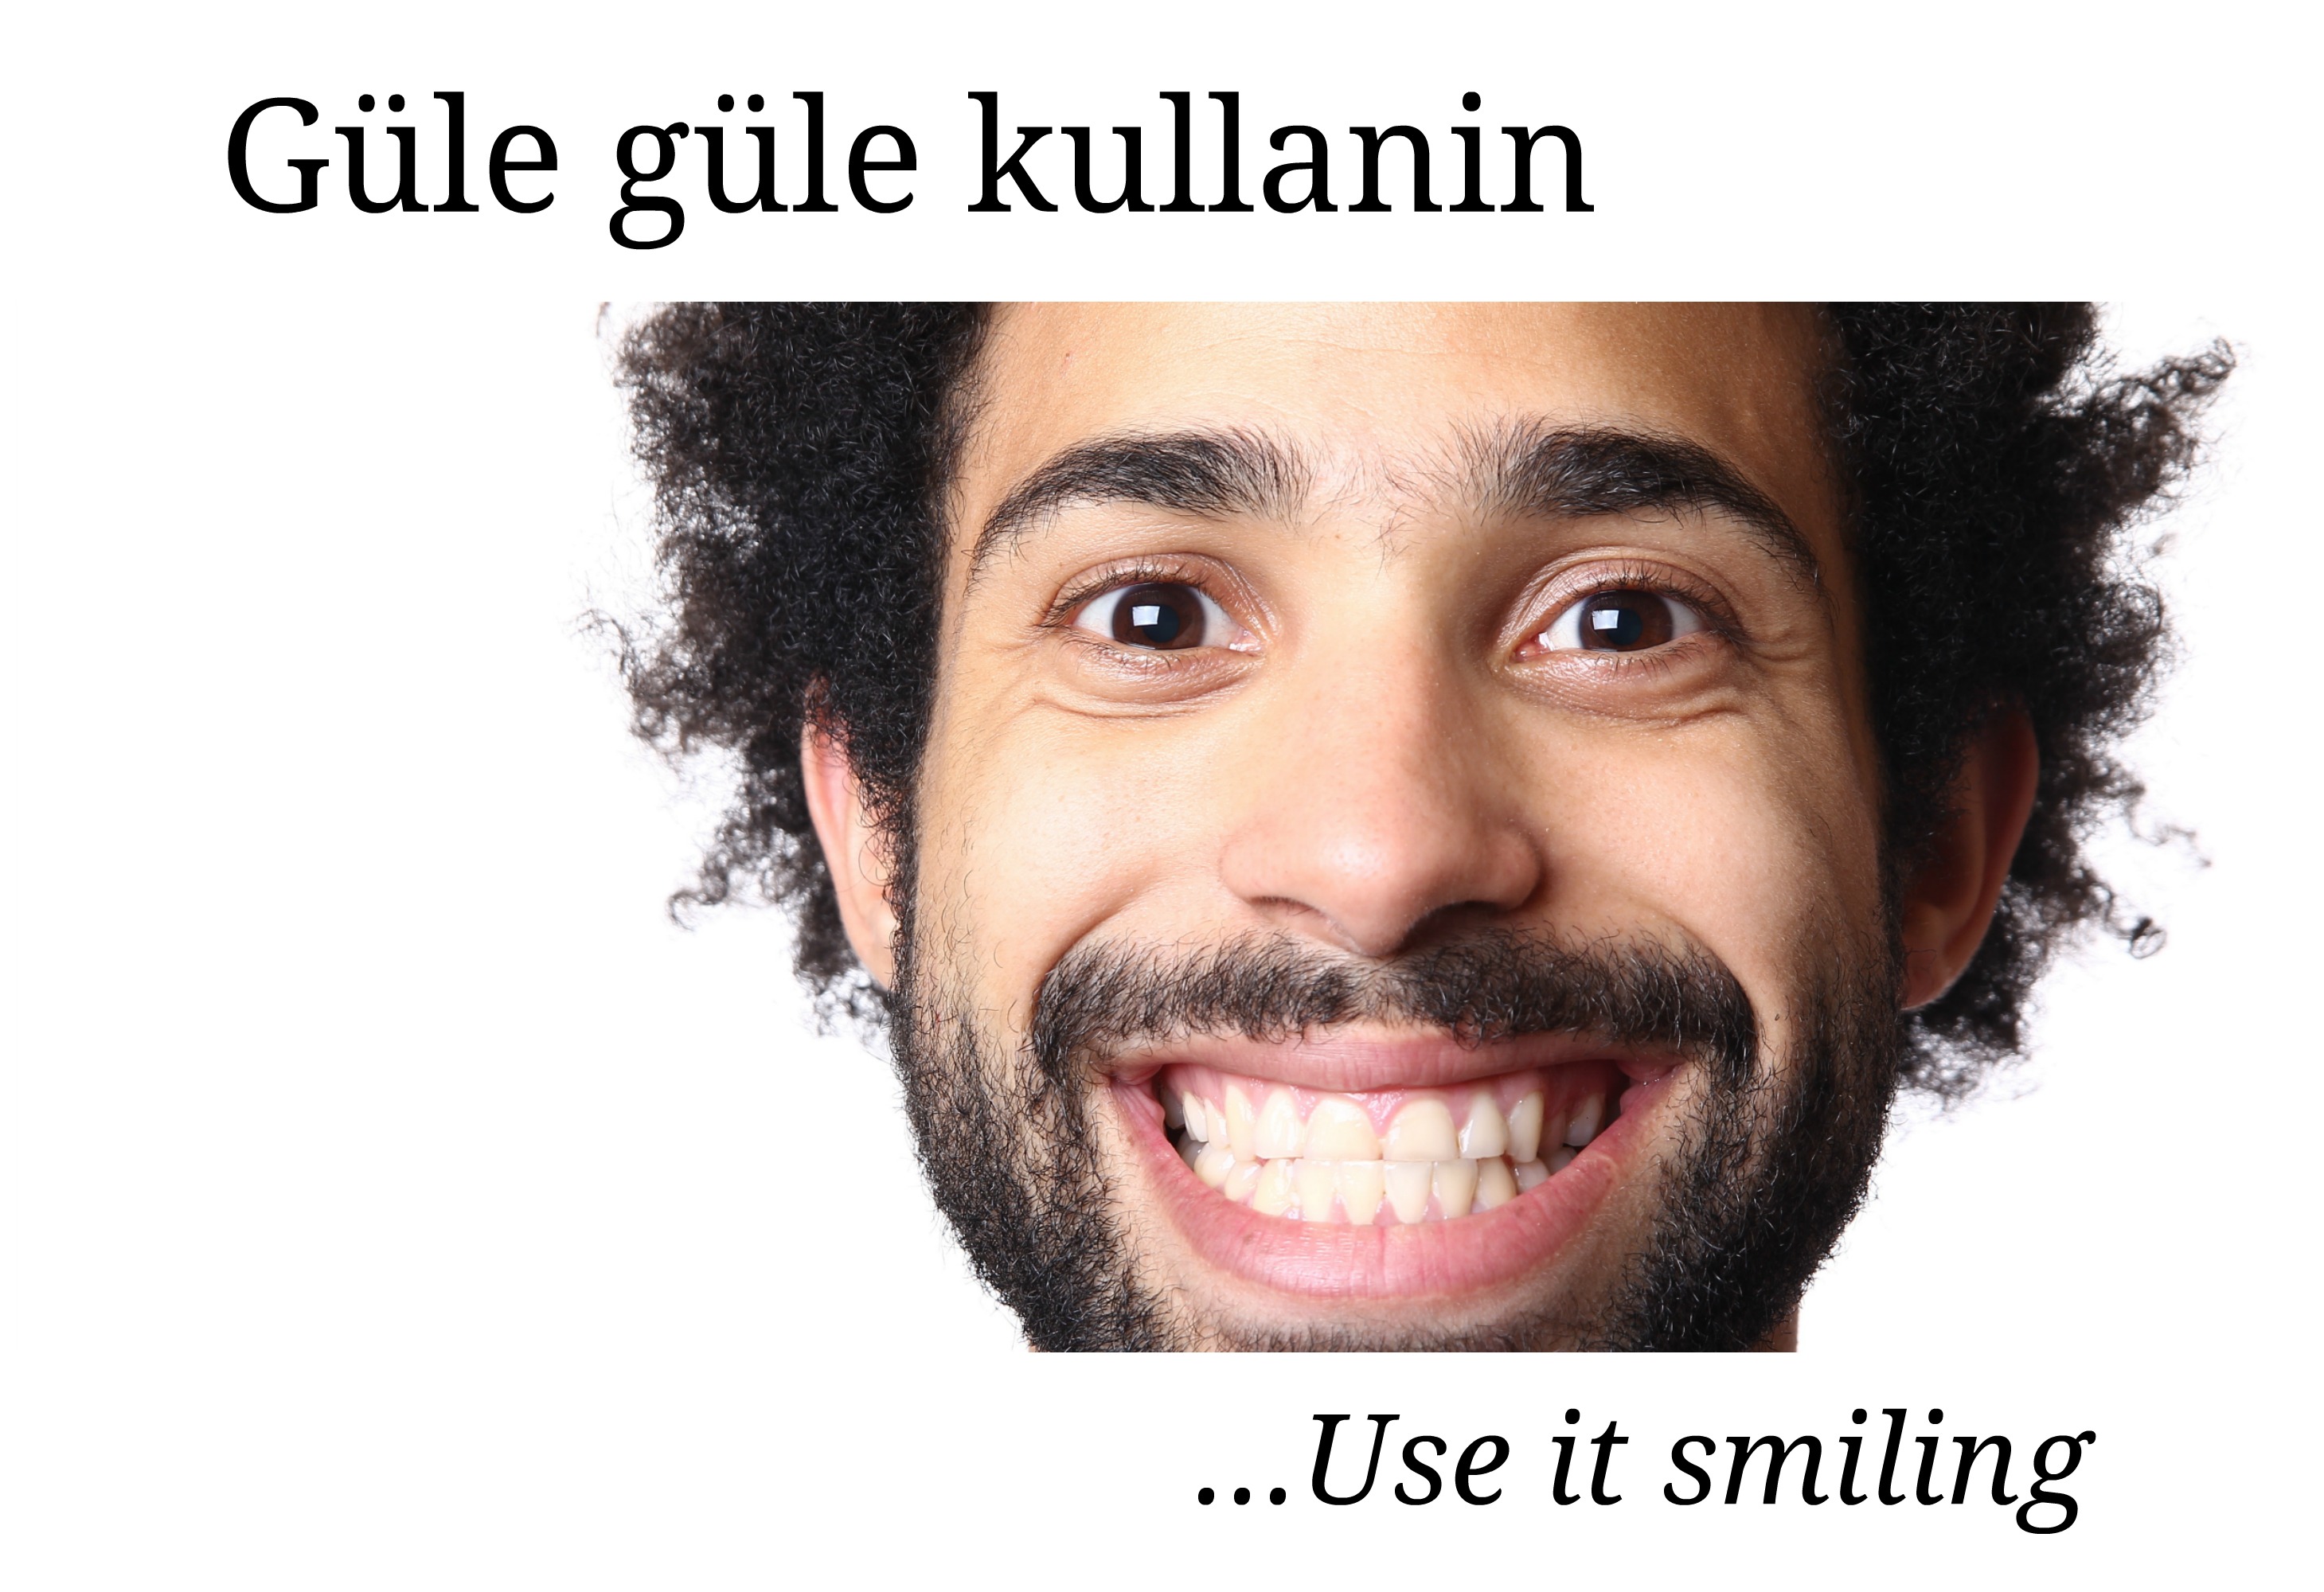 Gule gule kullanin - Turkish proverb